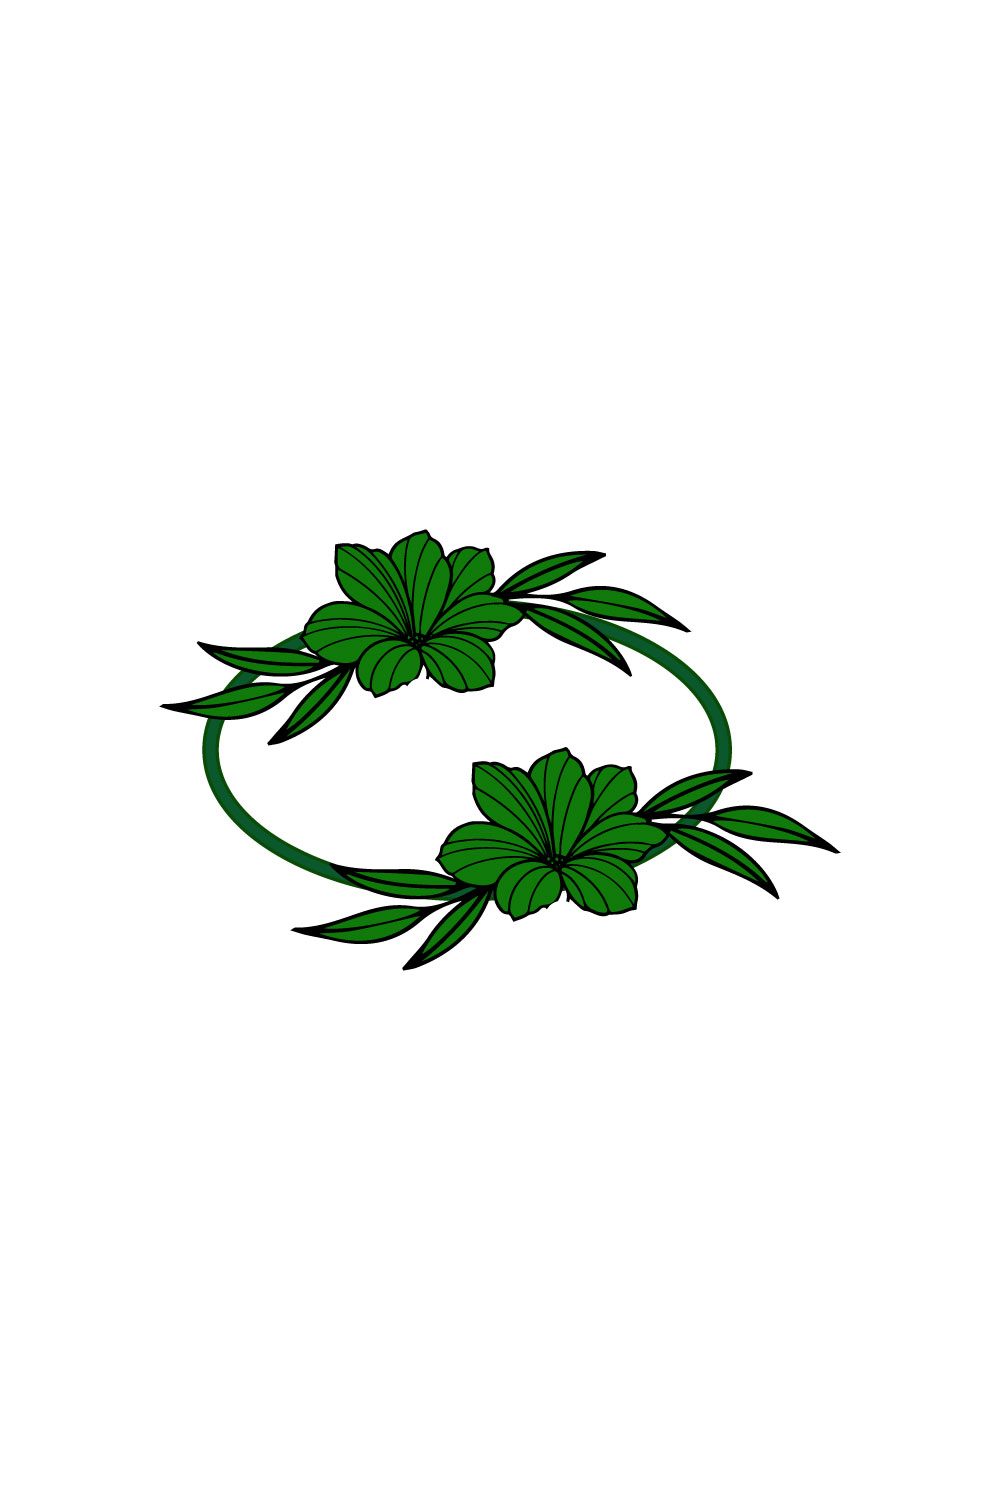 Free medicinal plants logo pinterest preview image.